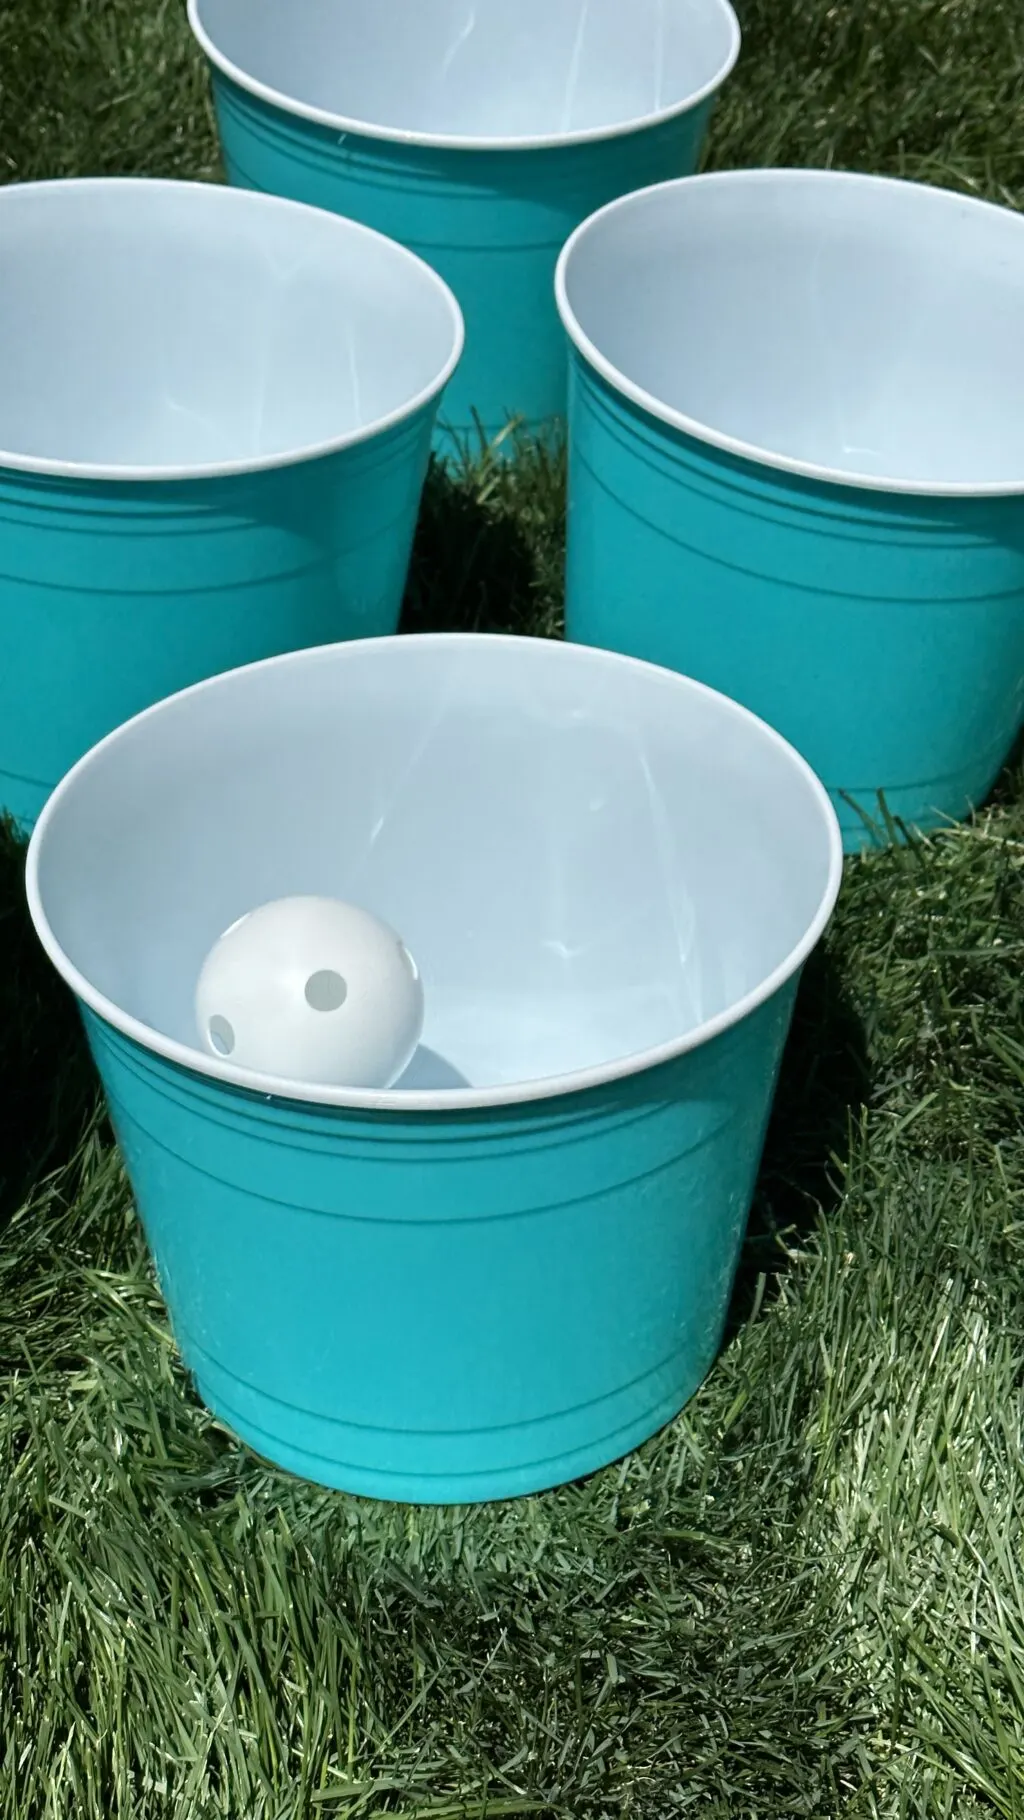 aqua giant yard pong buckets in lawn